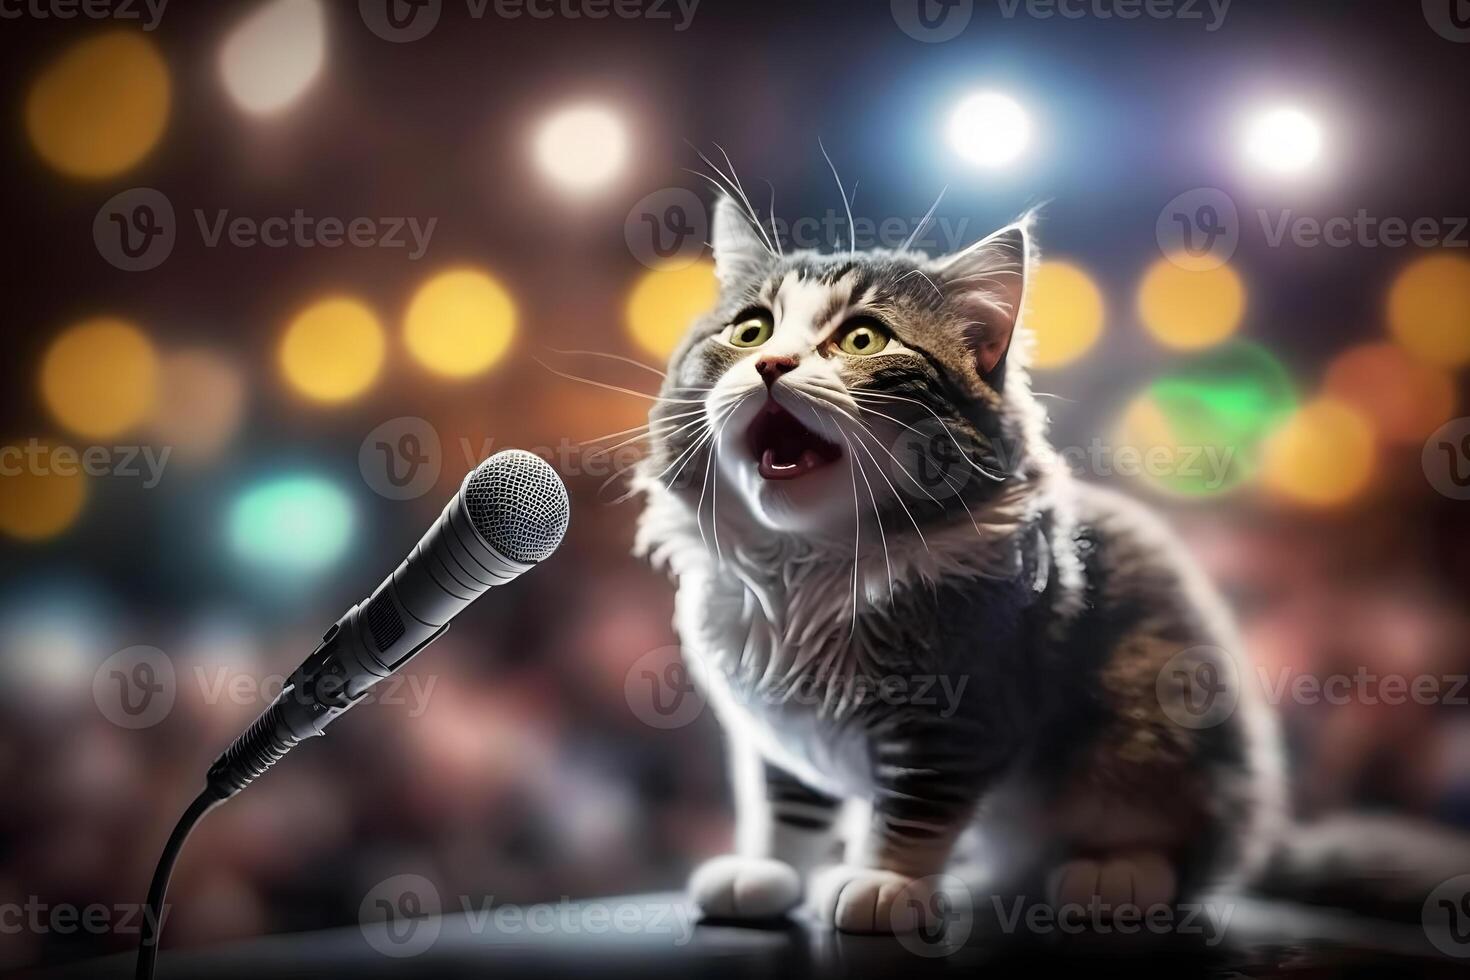 gato artista canta para dentro uma microfone. neural rede ai gerado foto